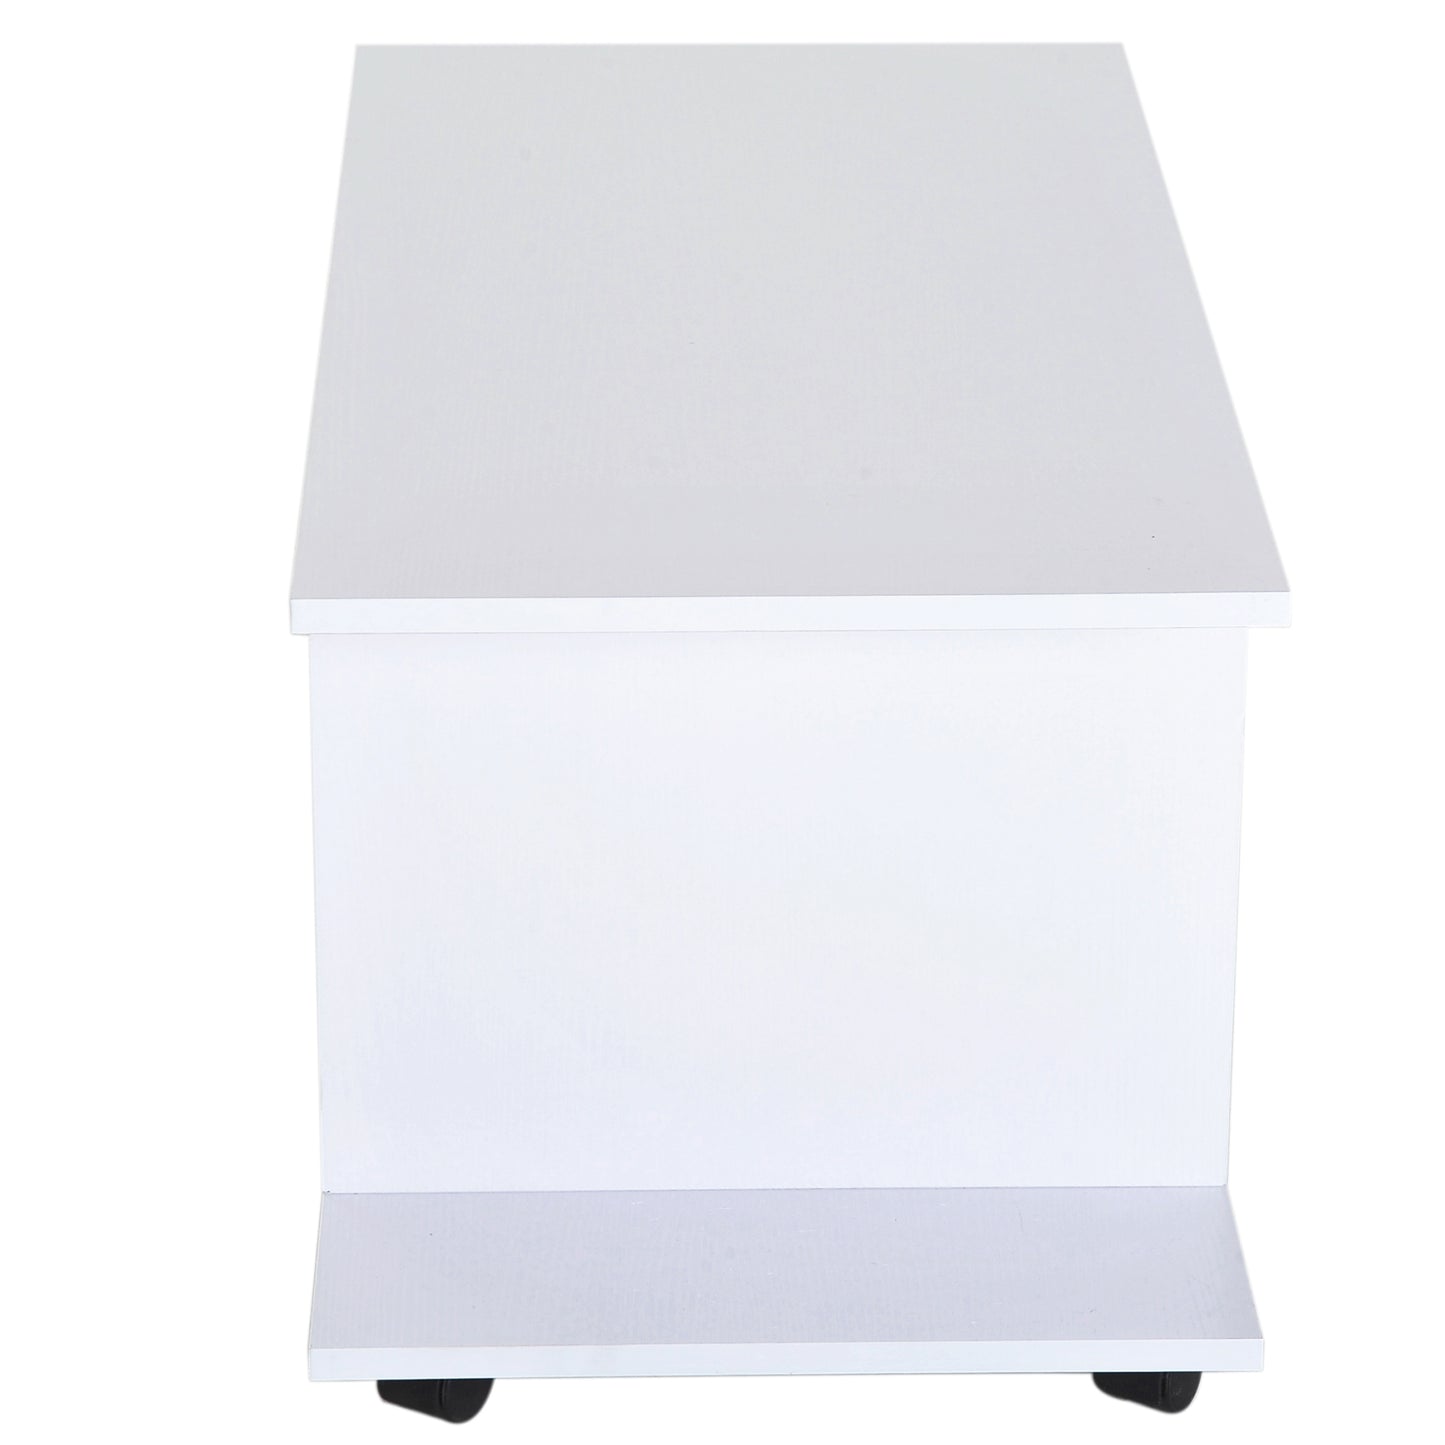 HOMCOM Modern TV Cabinet Stand Storage Shelves Table Bookcase White